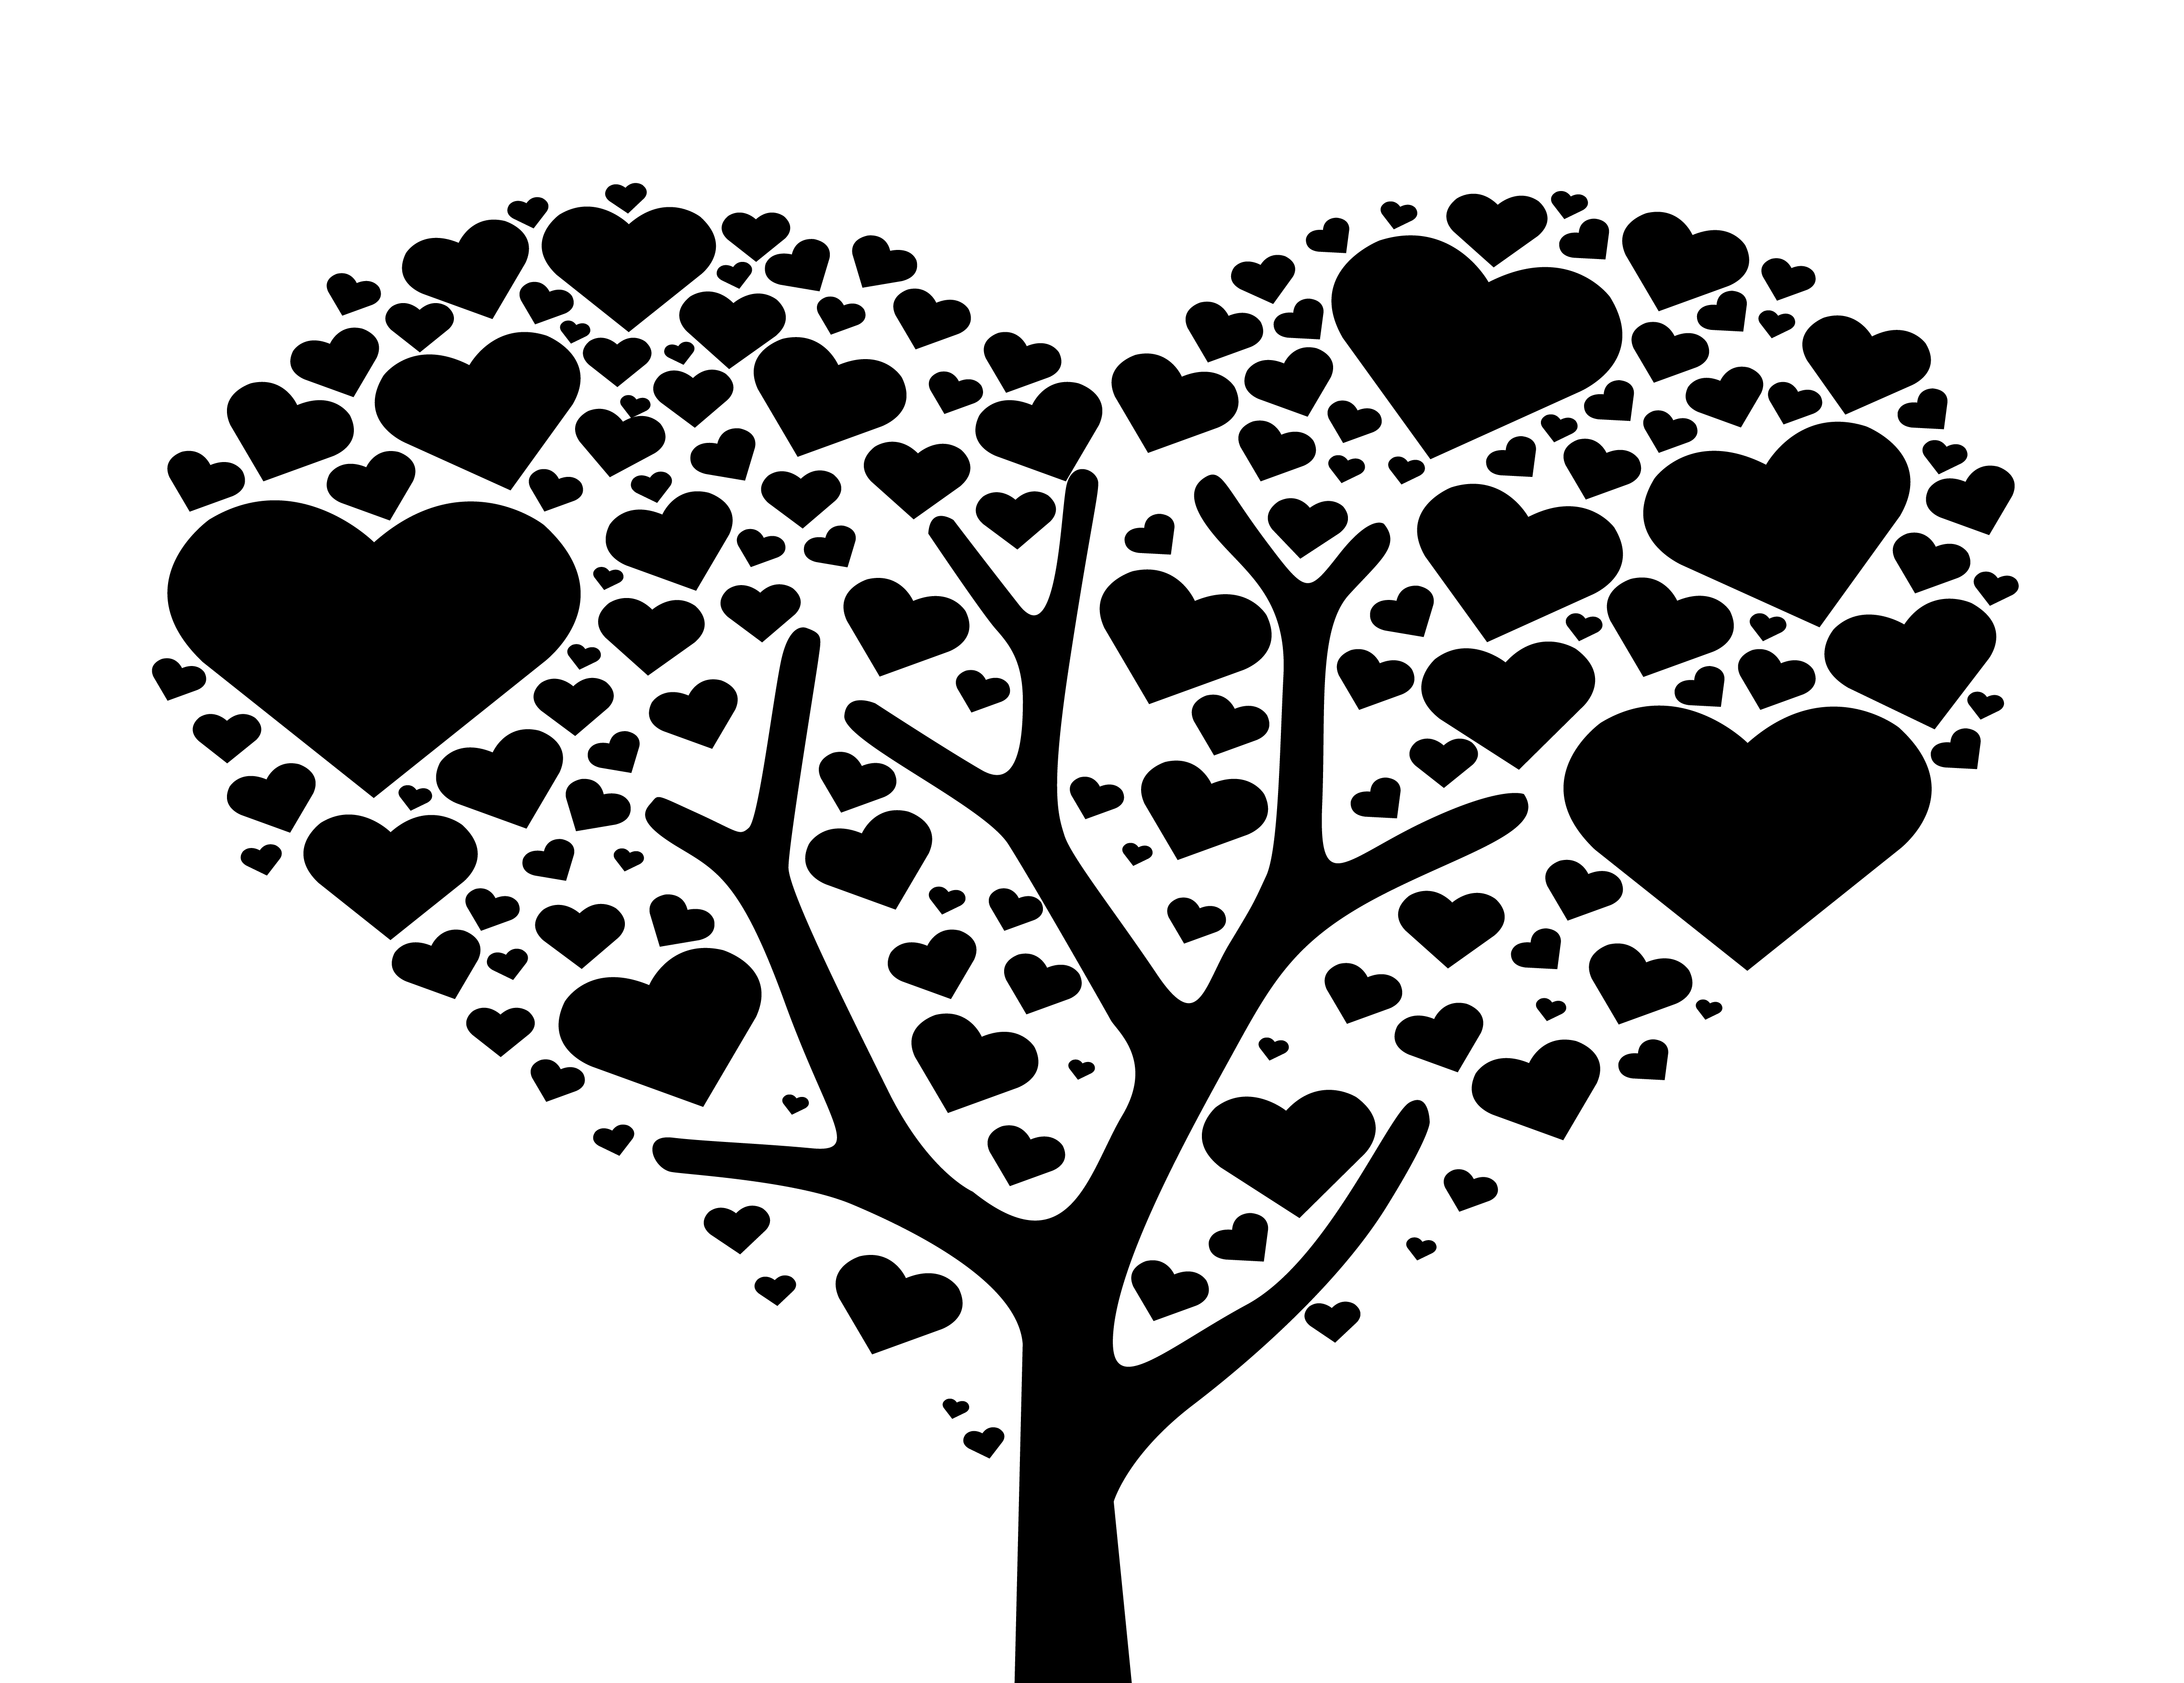 Download tree of heart , love tree symbol vector - Download Free ...